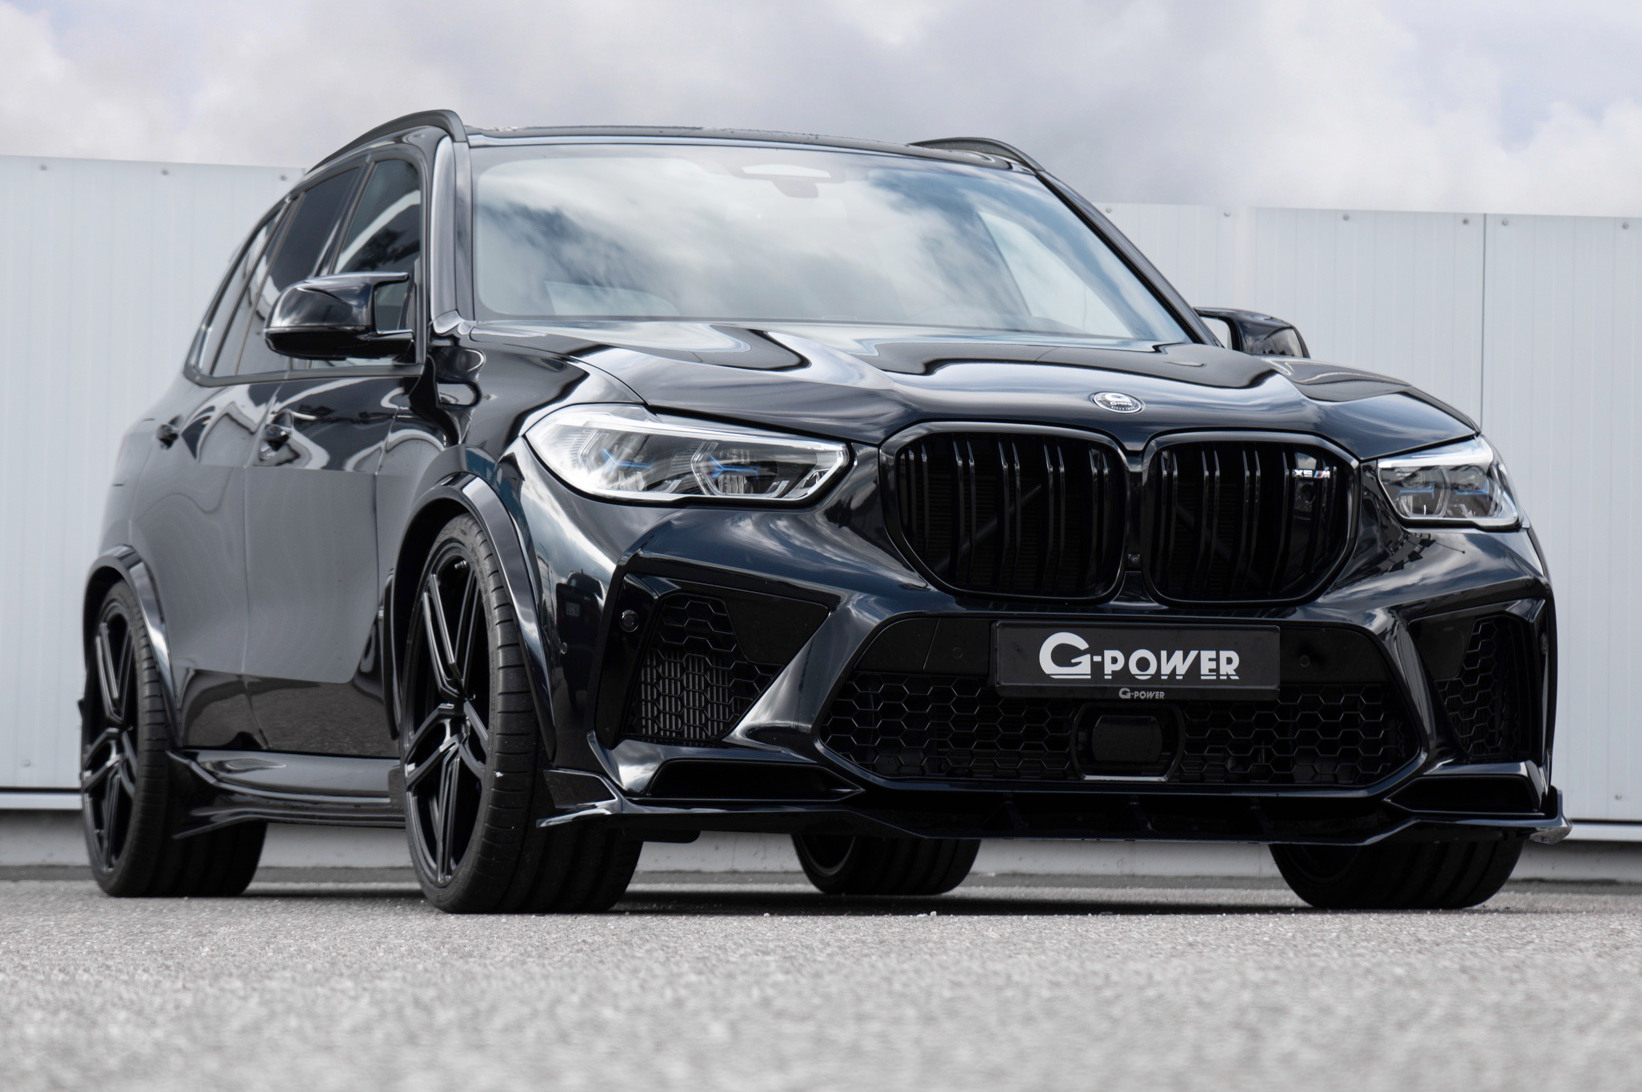 2023 BMW G Power Release